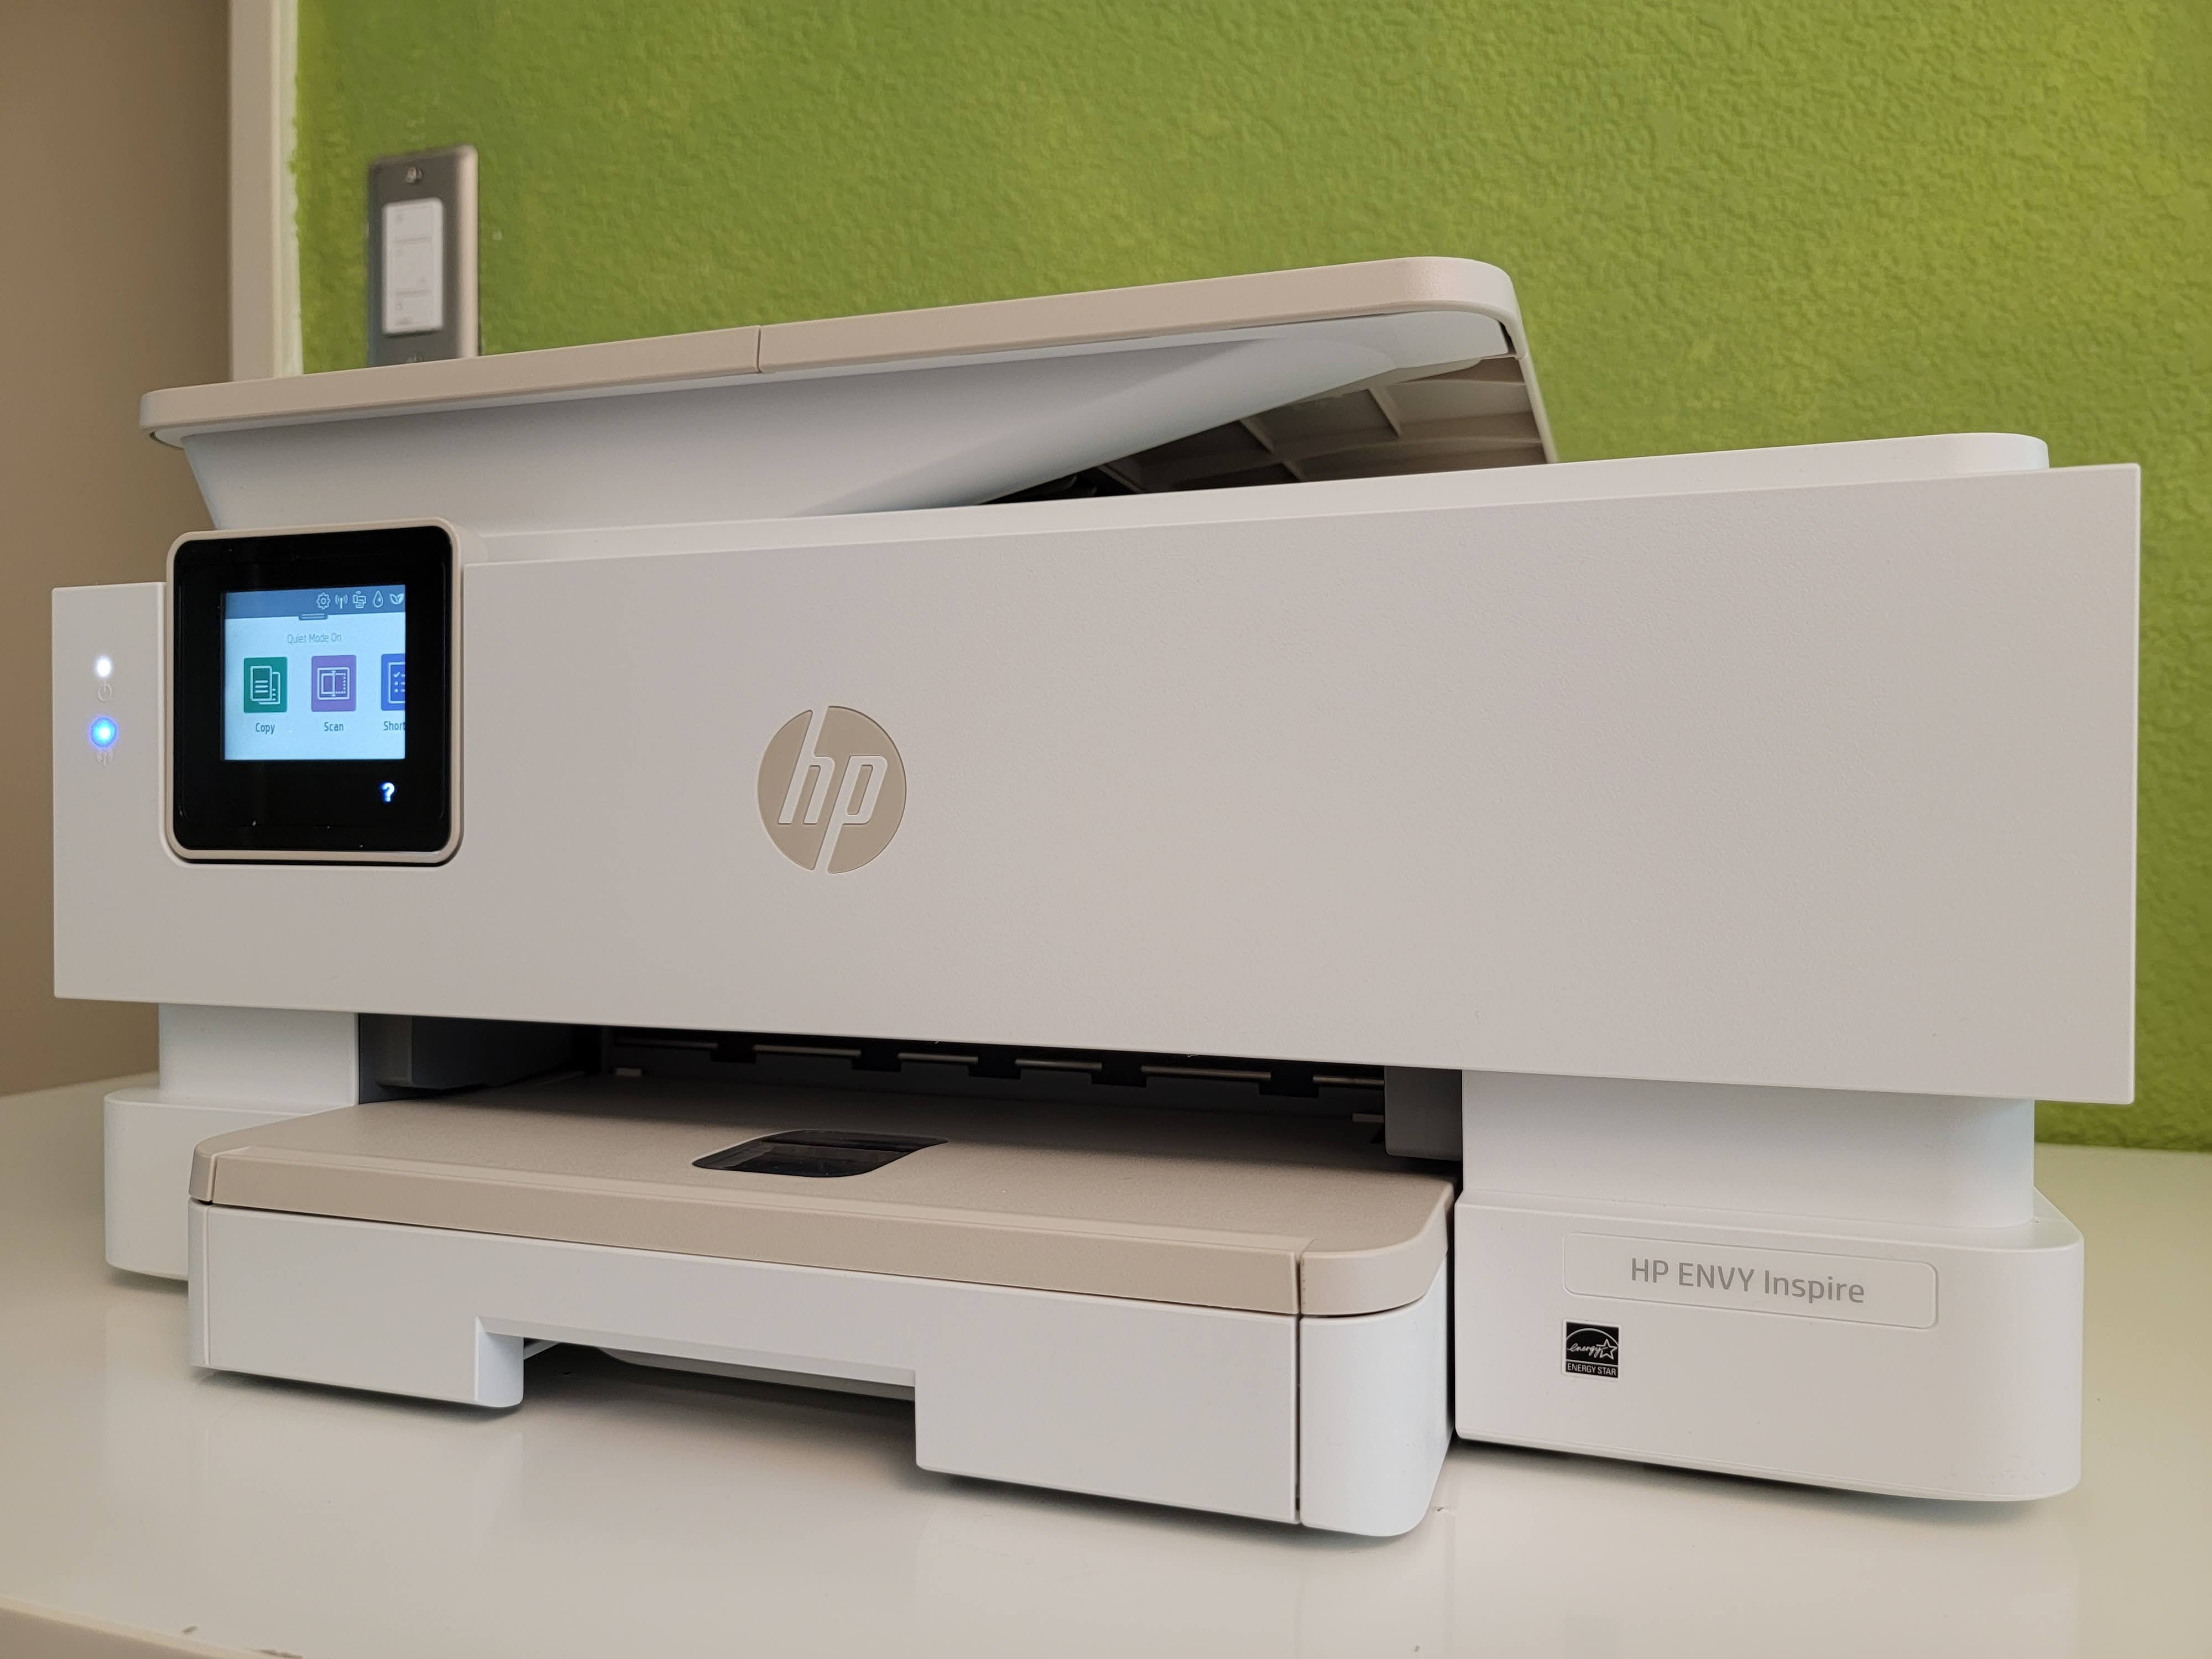 HP Envy Inspire 7900e Review: A Versatile Office Printer | Digital Trends